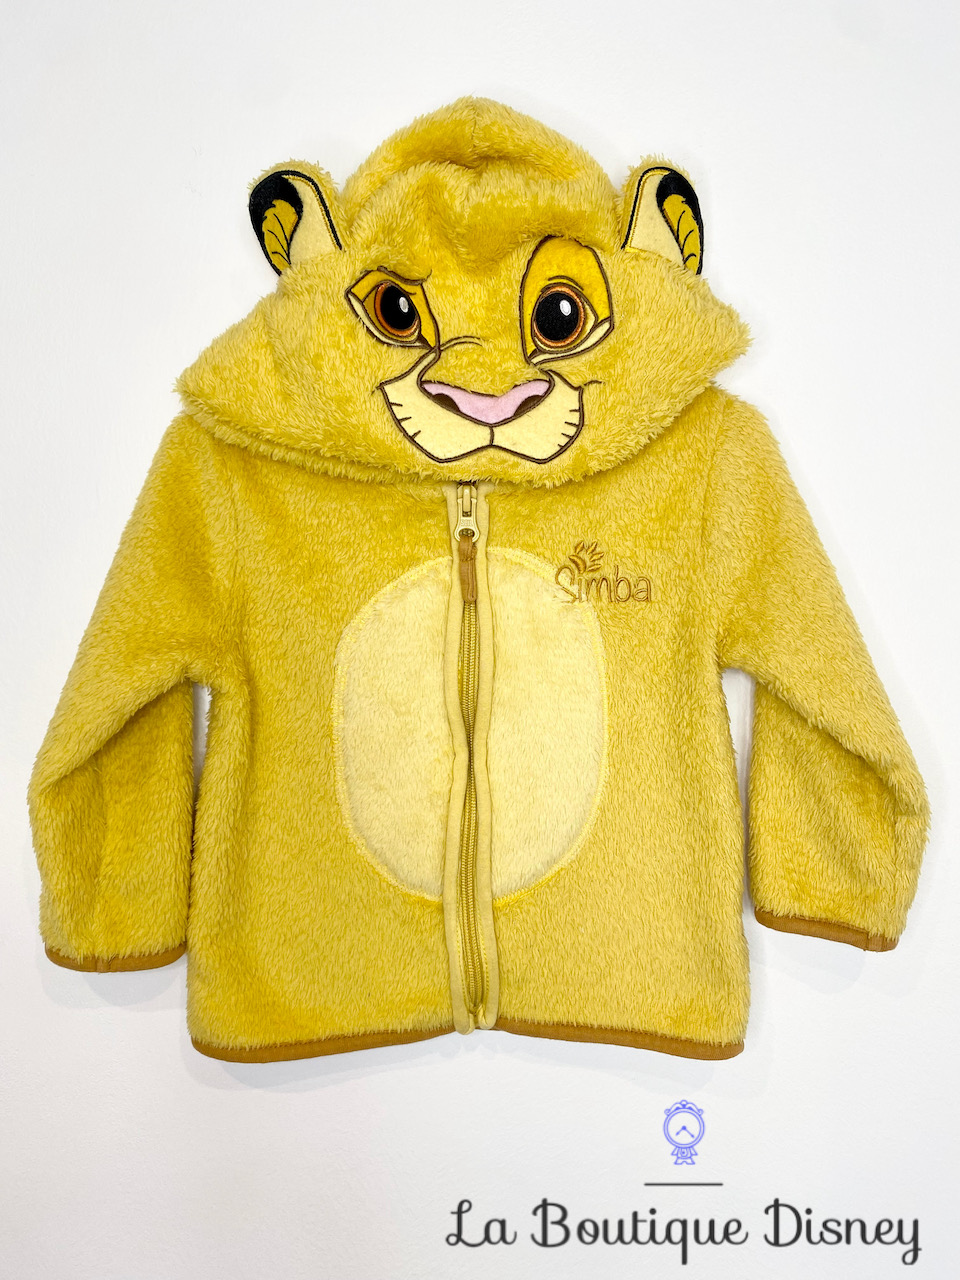 Veste polaire Simba Le roi lion Disneyland Paris Disney taille 12 mois capuche jaune